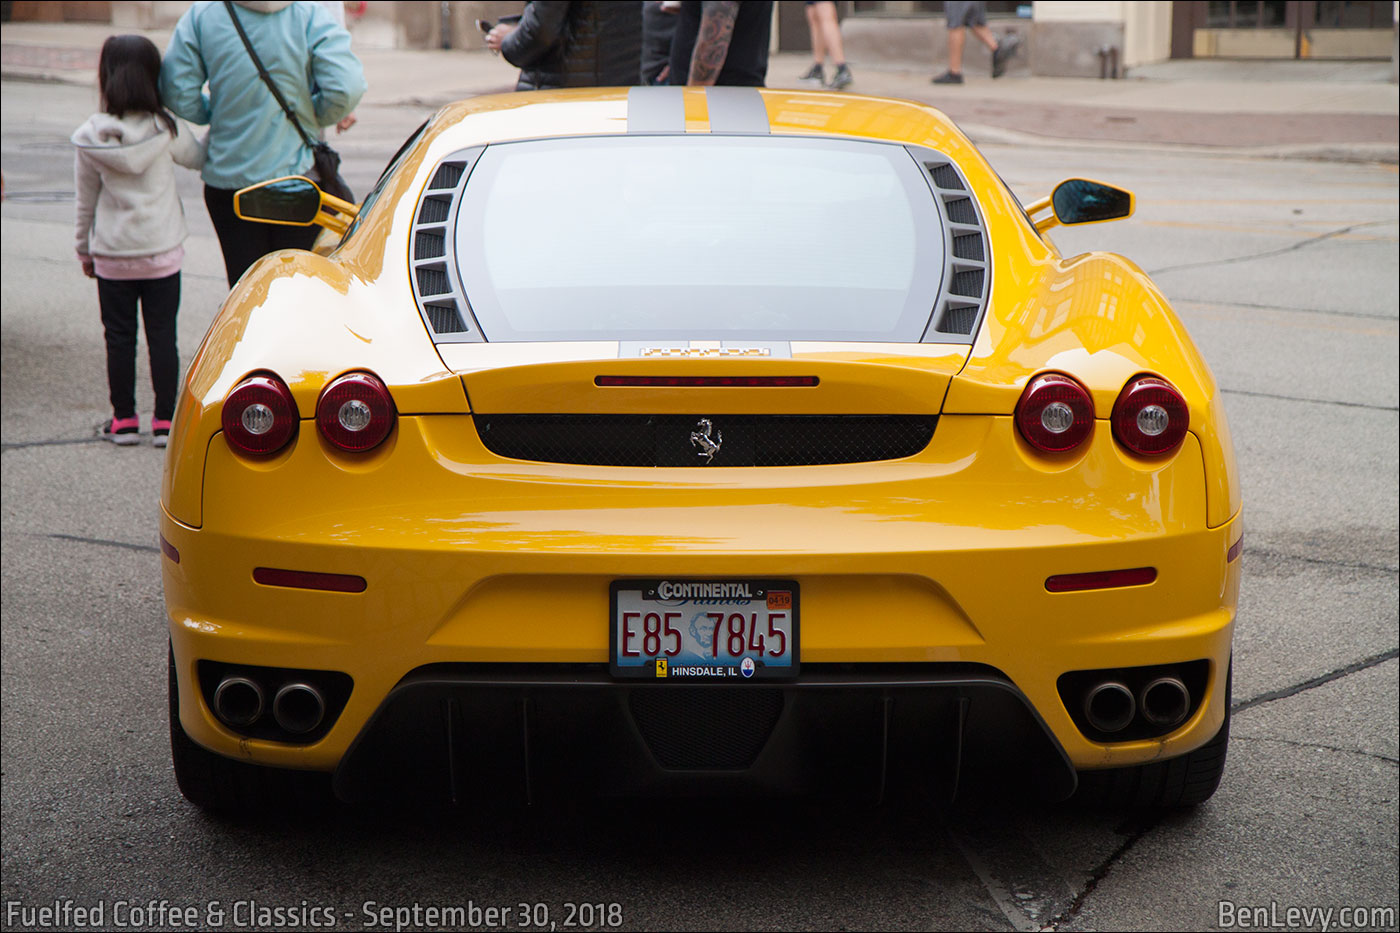 Tail of a Ferrari F430